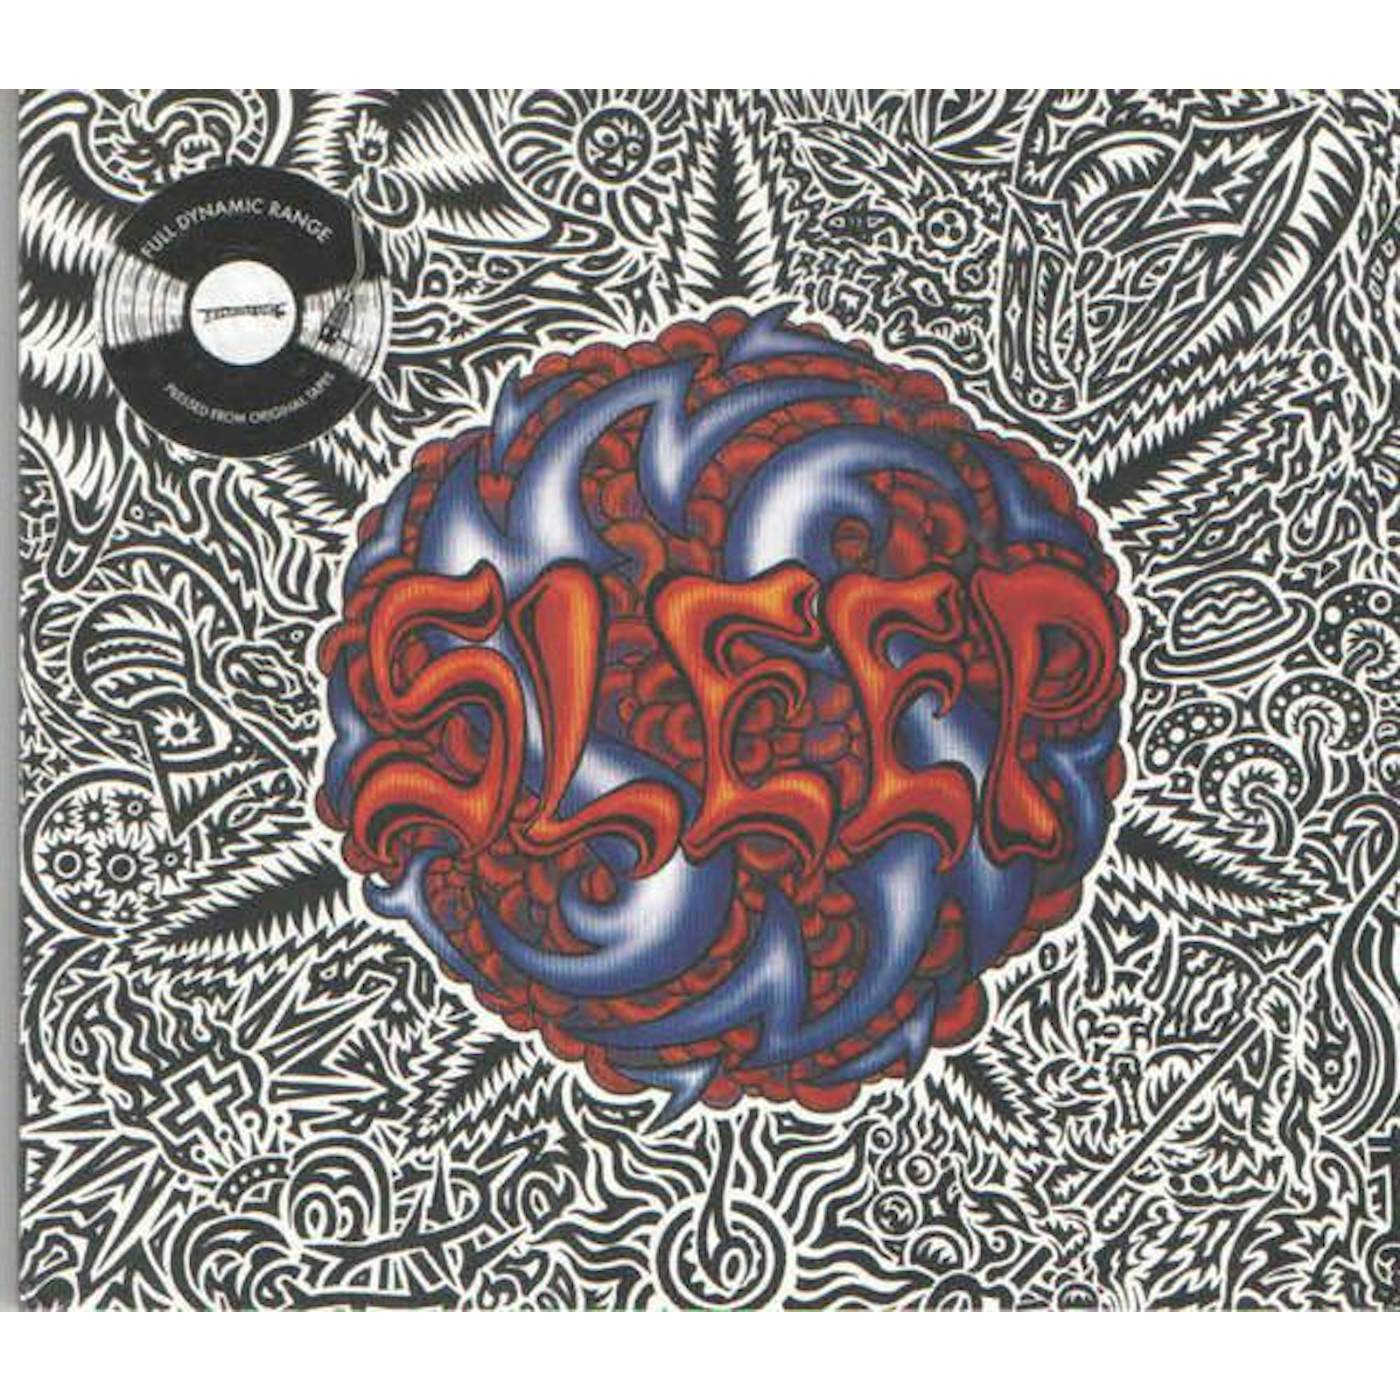 SLEEP'S HOLY MOUNTAIN (FULL DYNAMIC RANGE AUDIO) CD